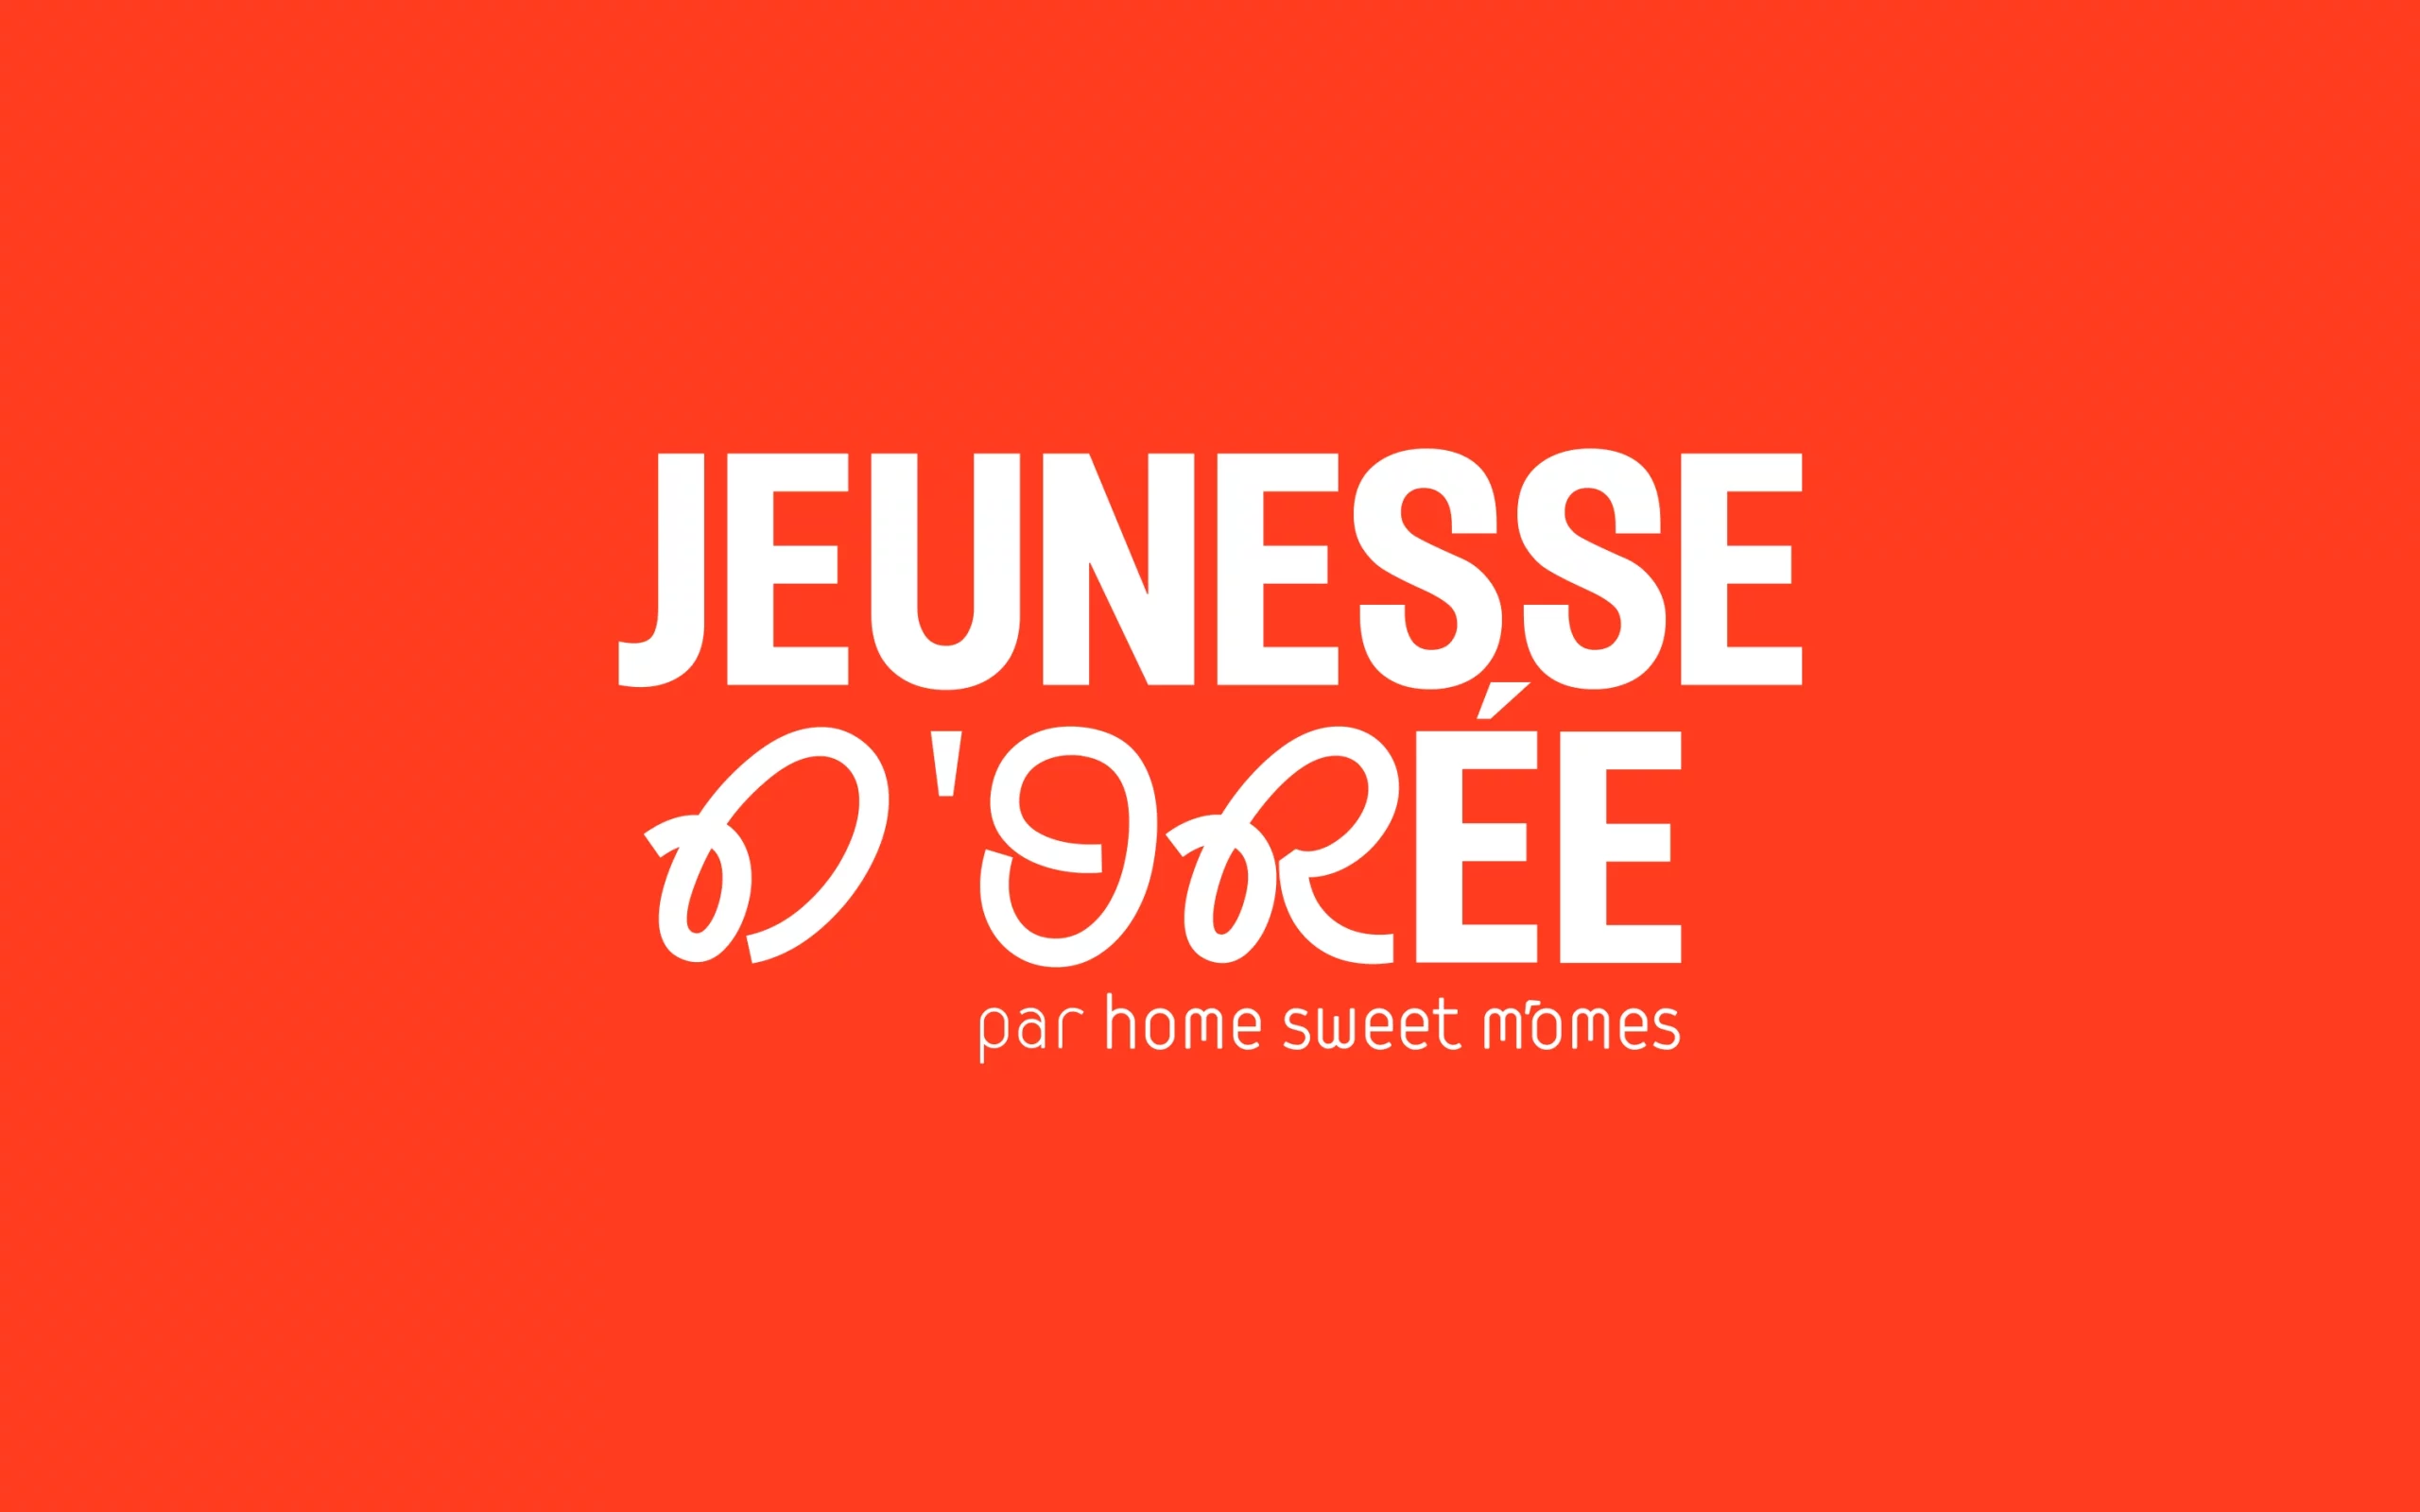 Home-Sweet-Momes-Jeunesse-dOree-Logo